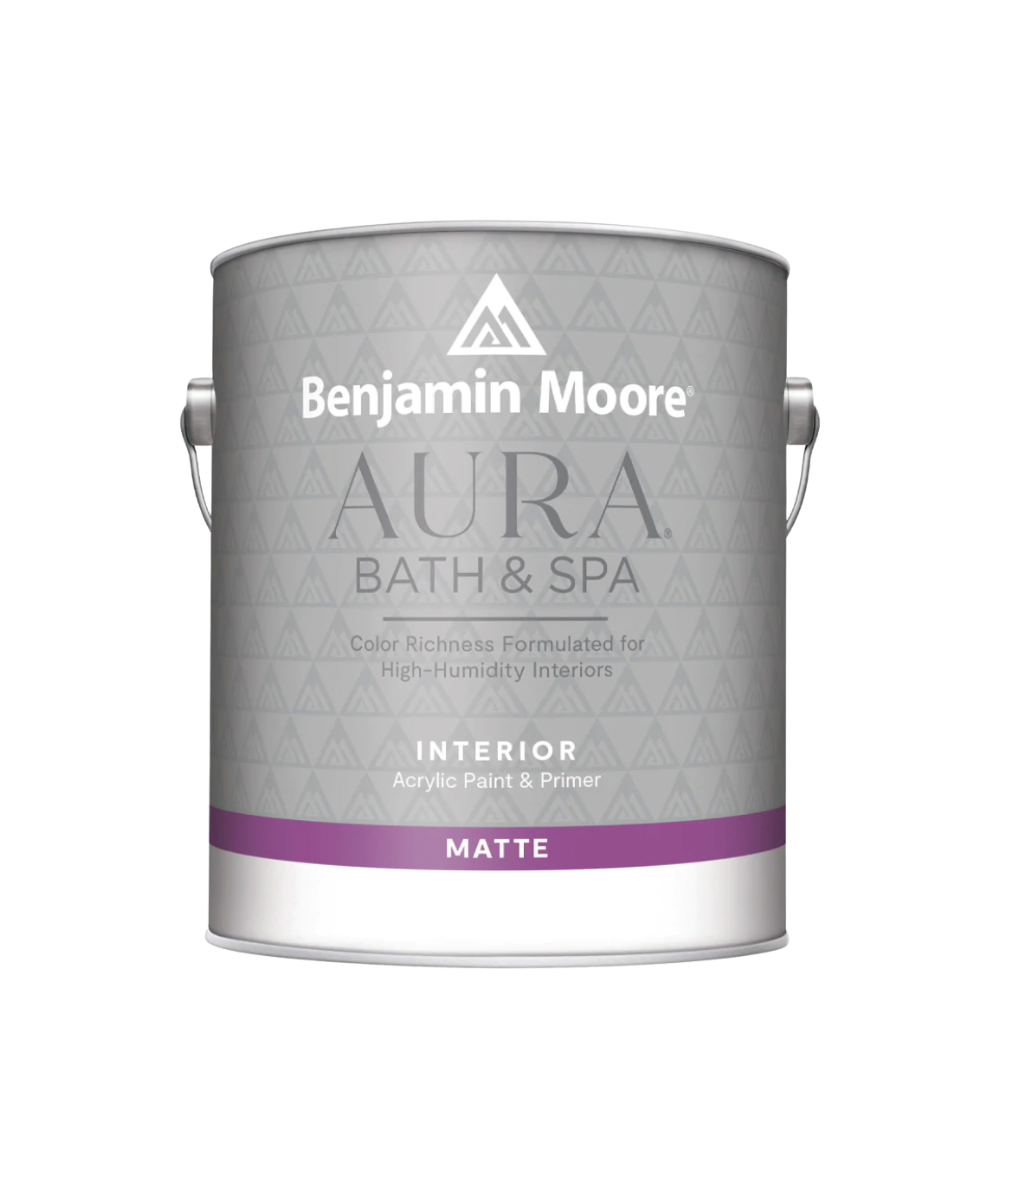 Aura Bath & Spa by Benjamin Moore with Matte finish - Gallon